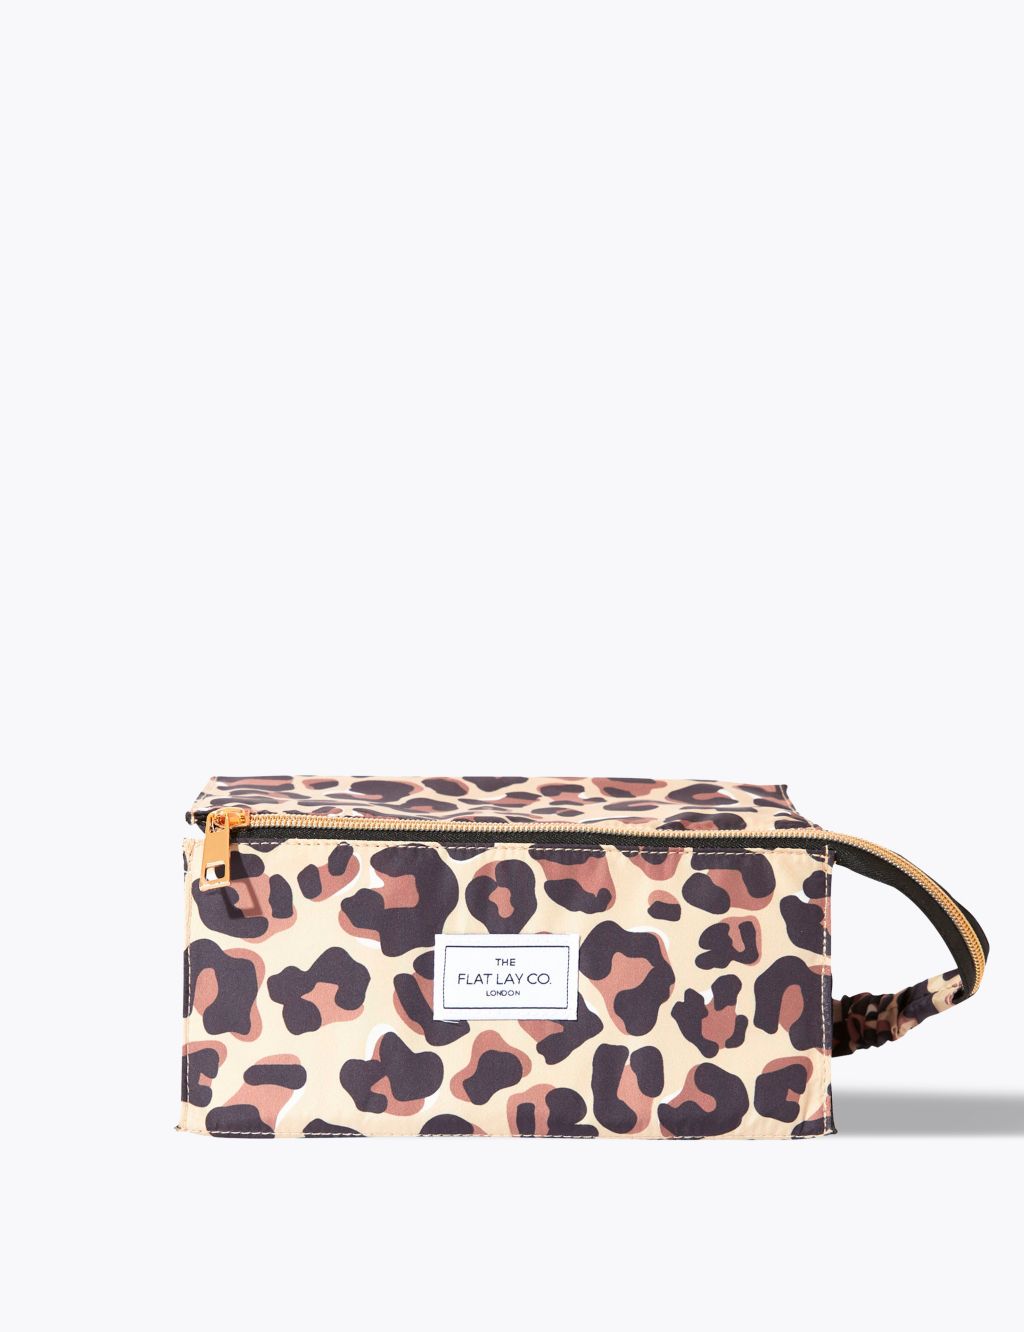 Makeup Box Bag In Leopard Print | Flat Lay Co | M&S